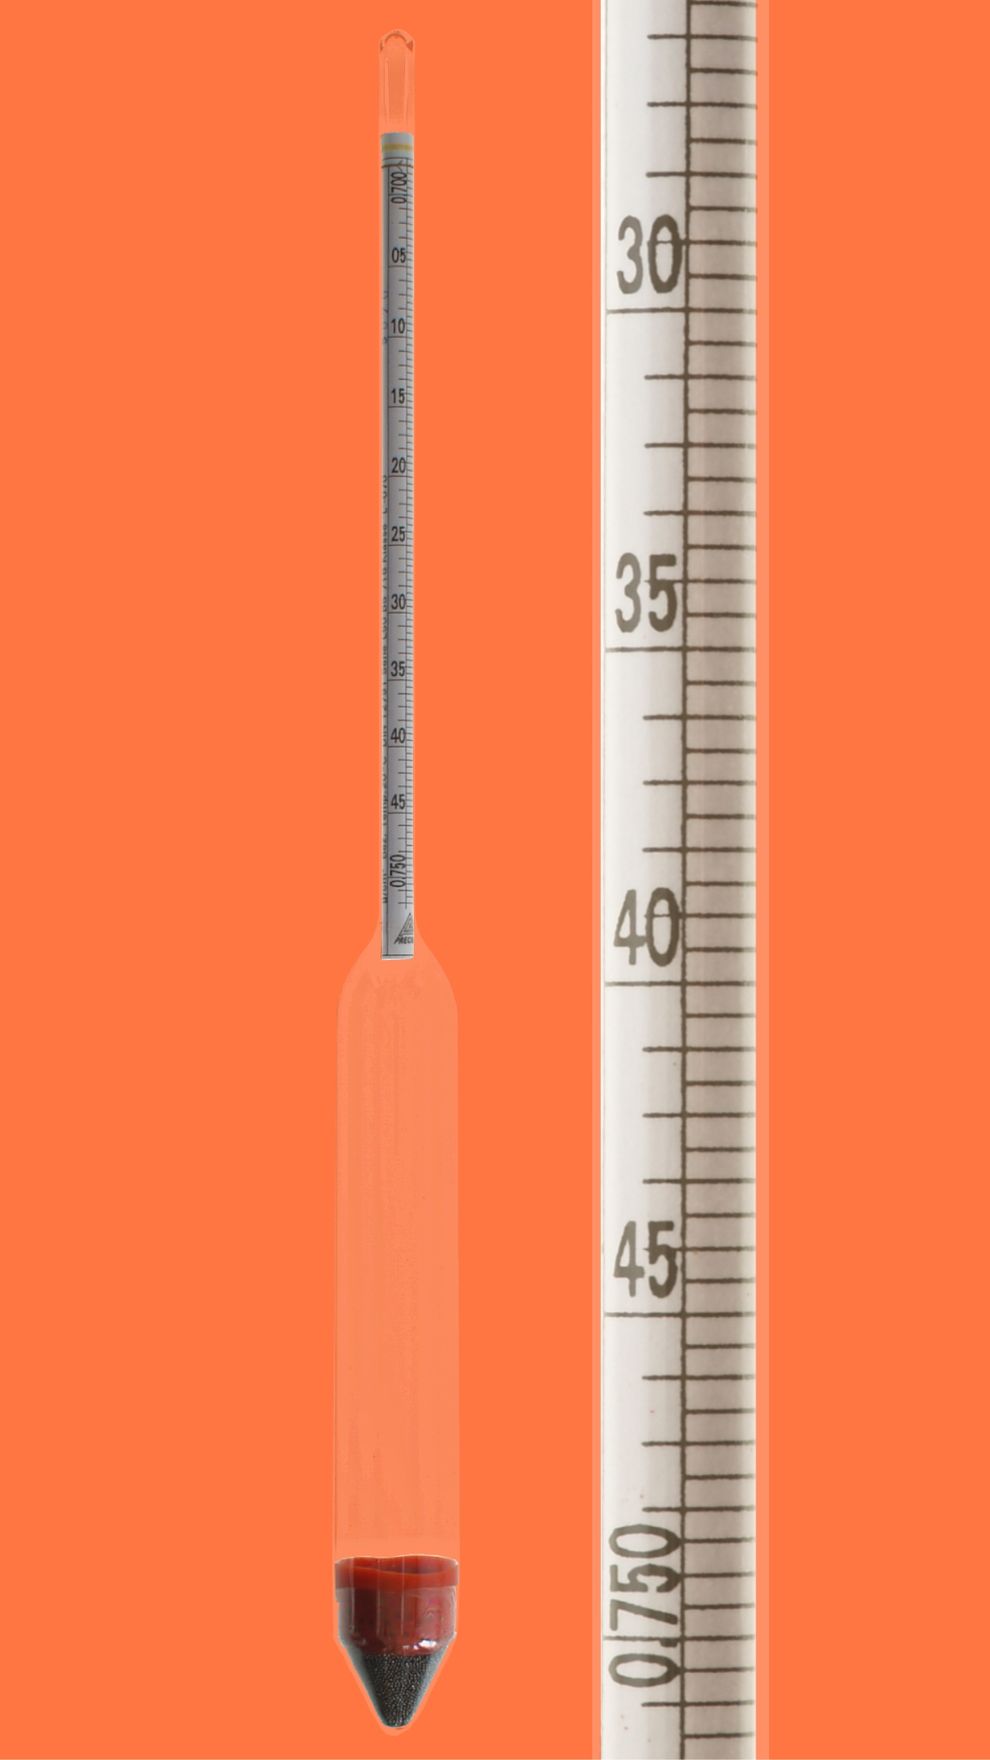 Aräometer, DIN 12791, L50, 0,65-0,70:0,0005g/cm³, Bezugstemp. 20°C, ohne Thermometer